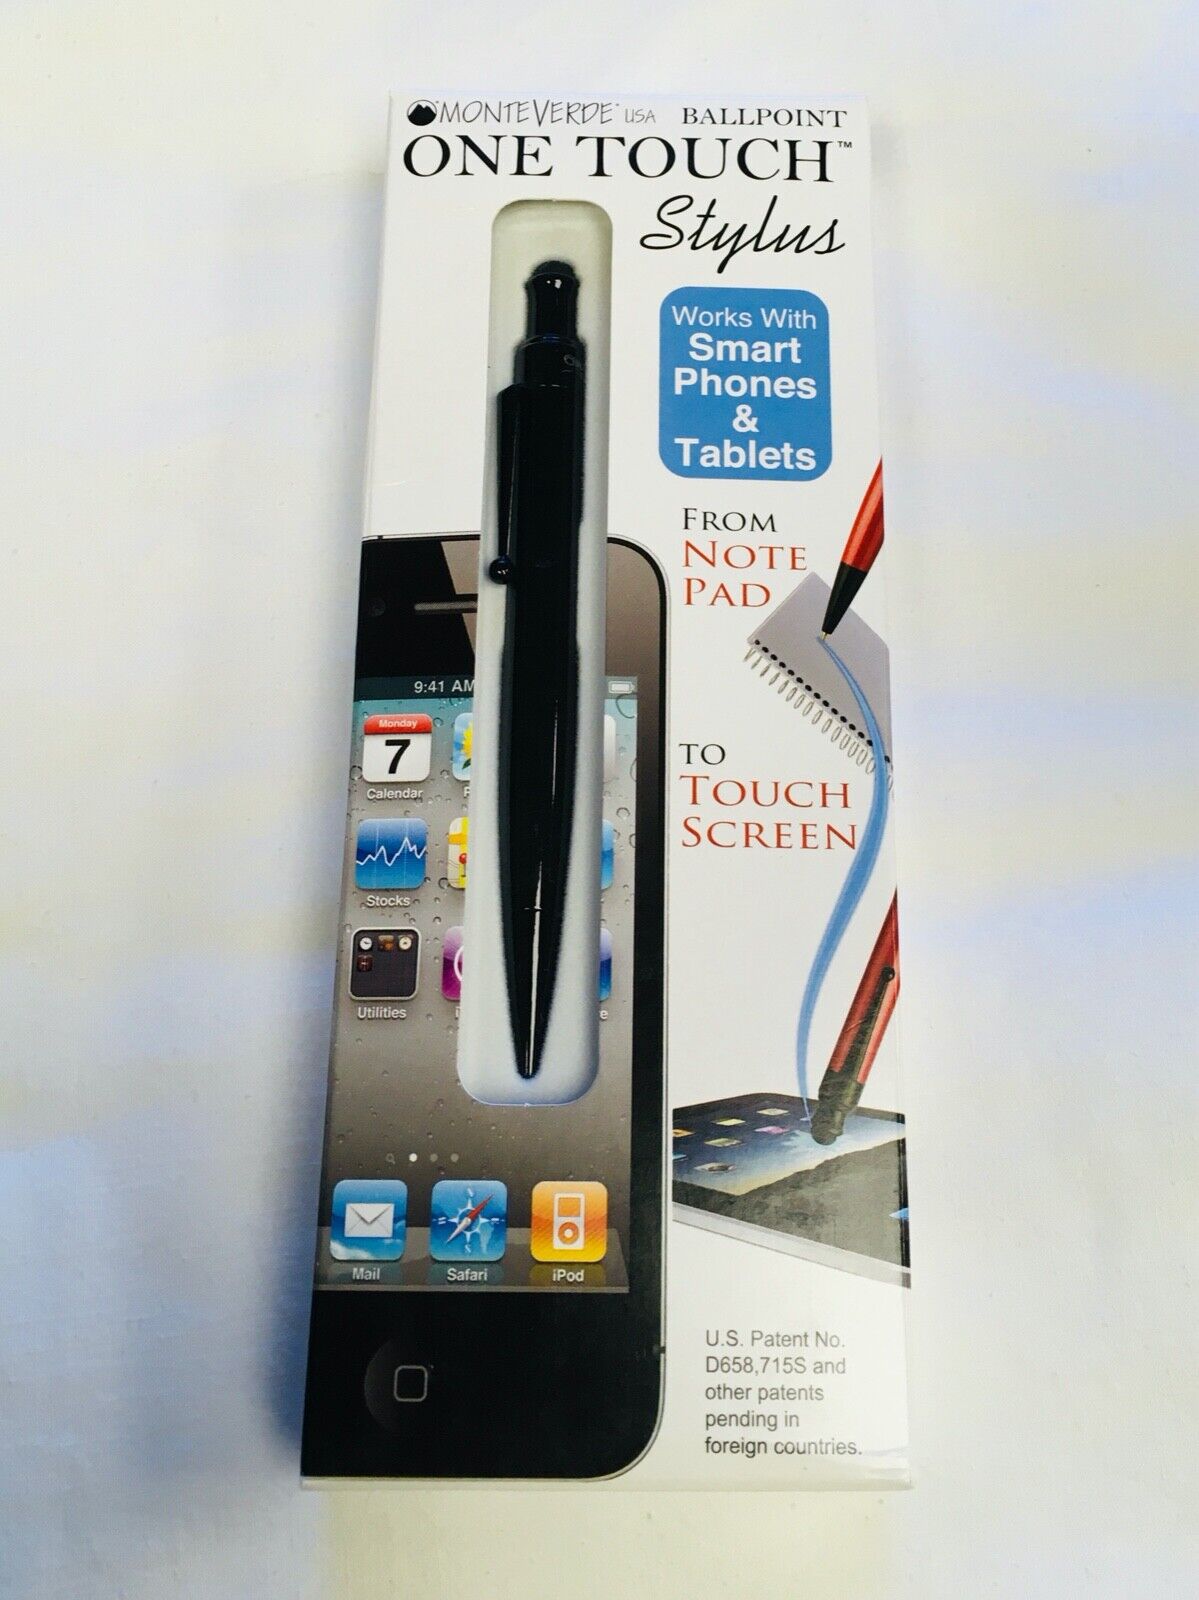 Monteverde One Touch Stylus with Ballpoint Pen - BLACK